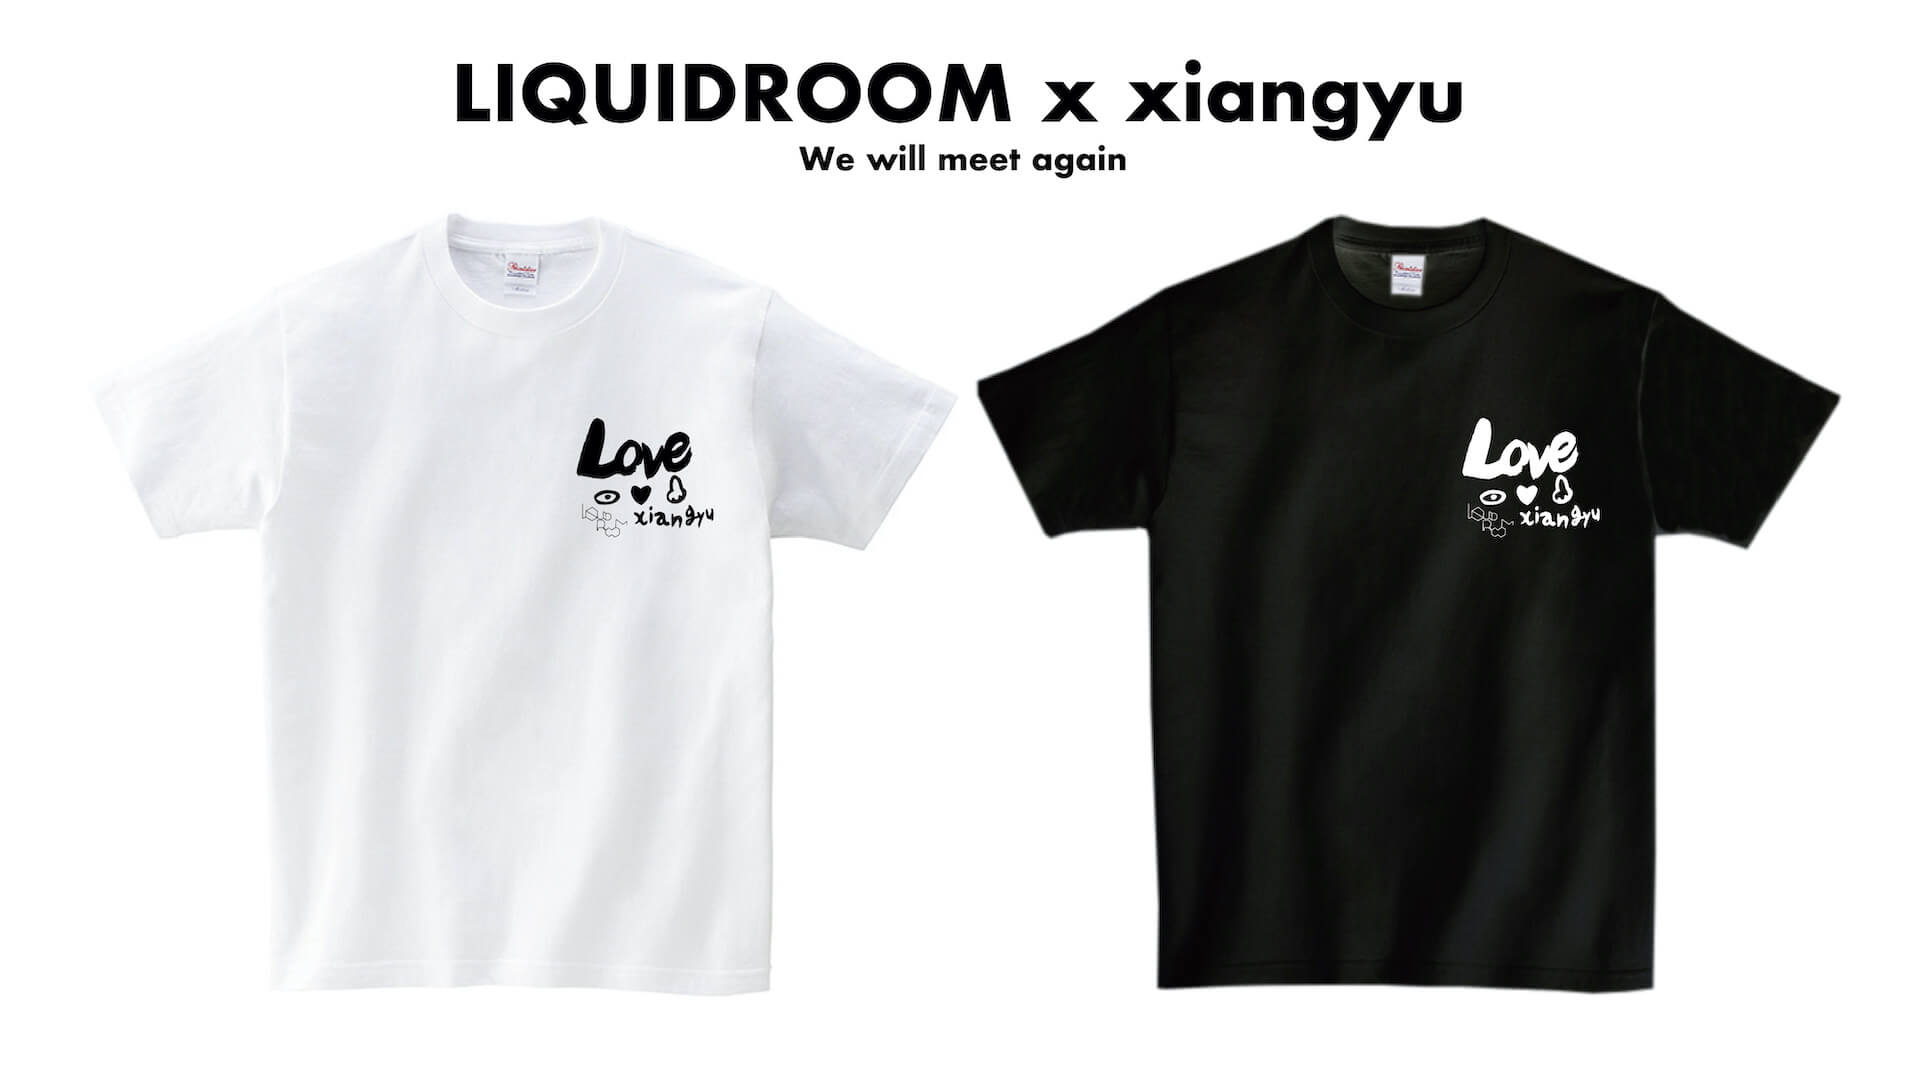 LIQUIDROOMのコラボTプロジェクト〈We will meet again〉にxiangyu、玉名ラーメンが登場 music200805-liquidroom-xiangyu-tamanaramen-4